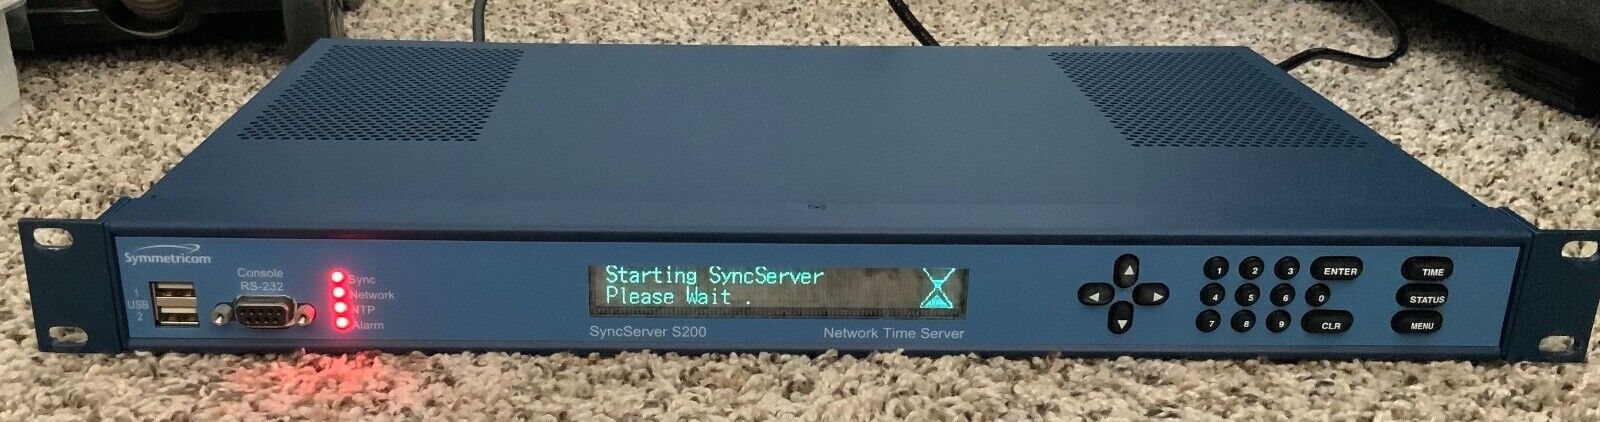 Symmetricom SyncServer S200 GPS Network Time Server